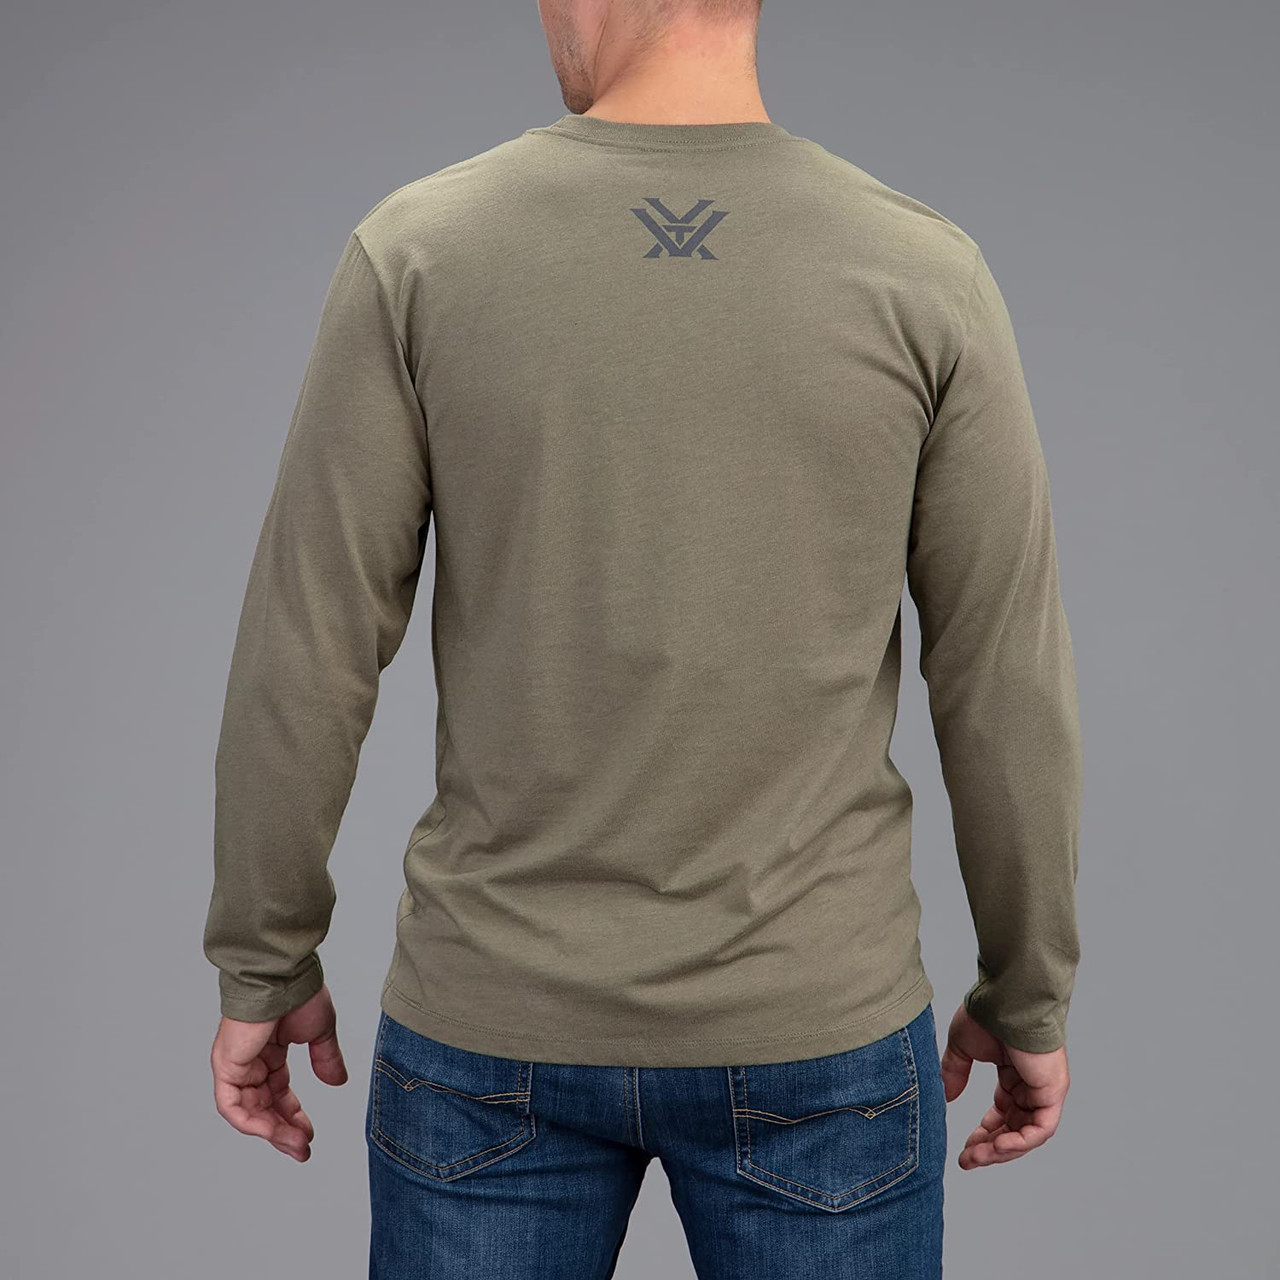 Vortex Optics Core Logo Long Sleeve Shirts Military Camo Heather - Large